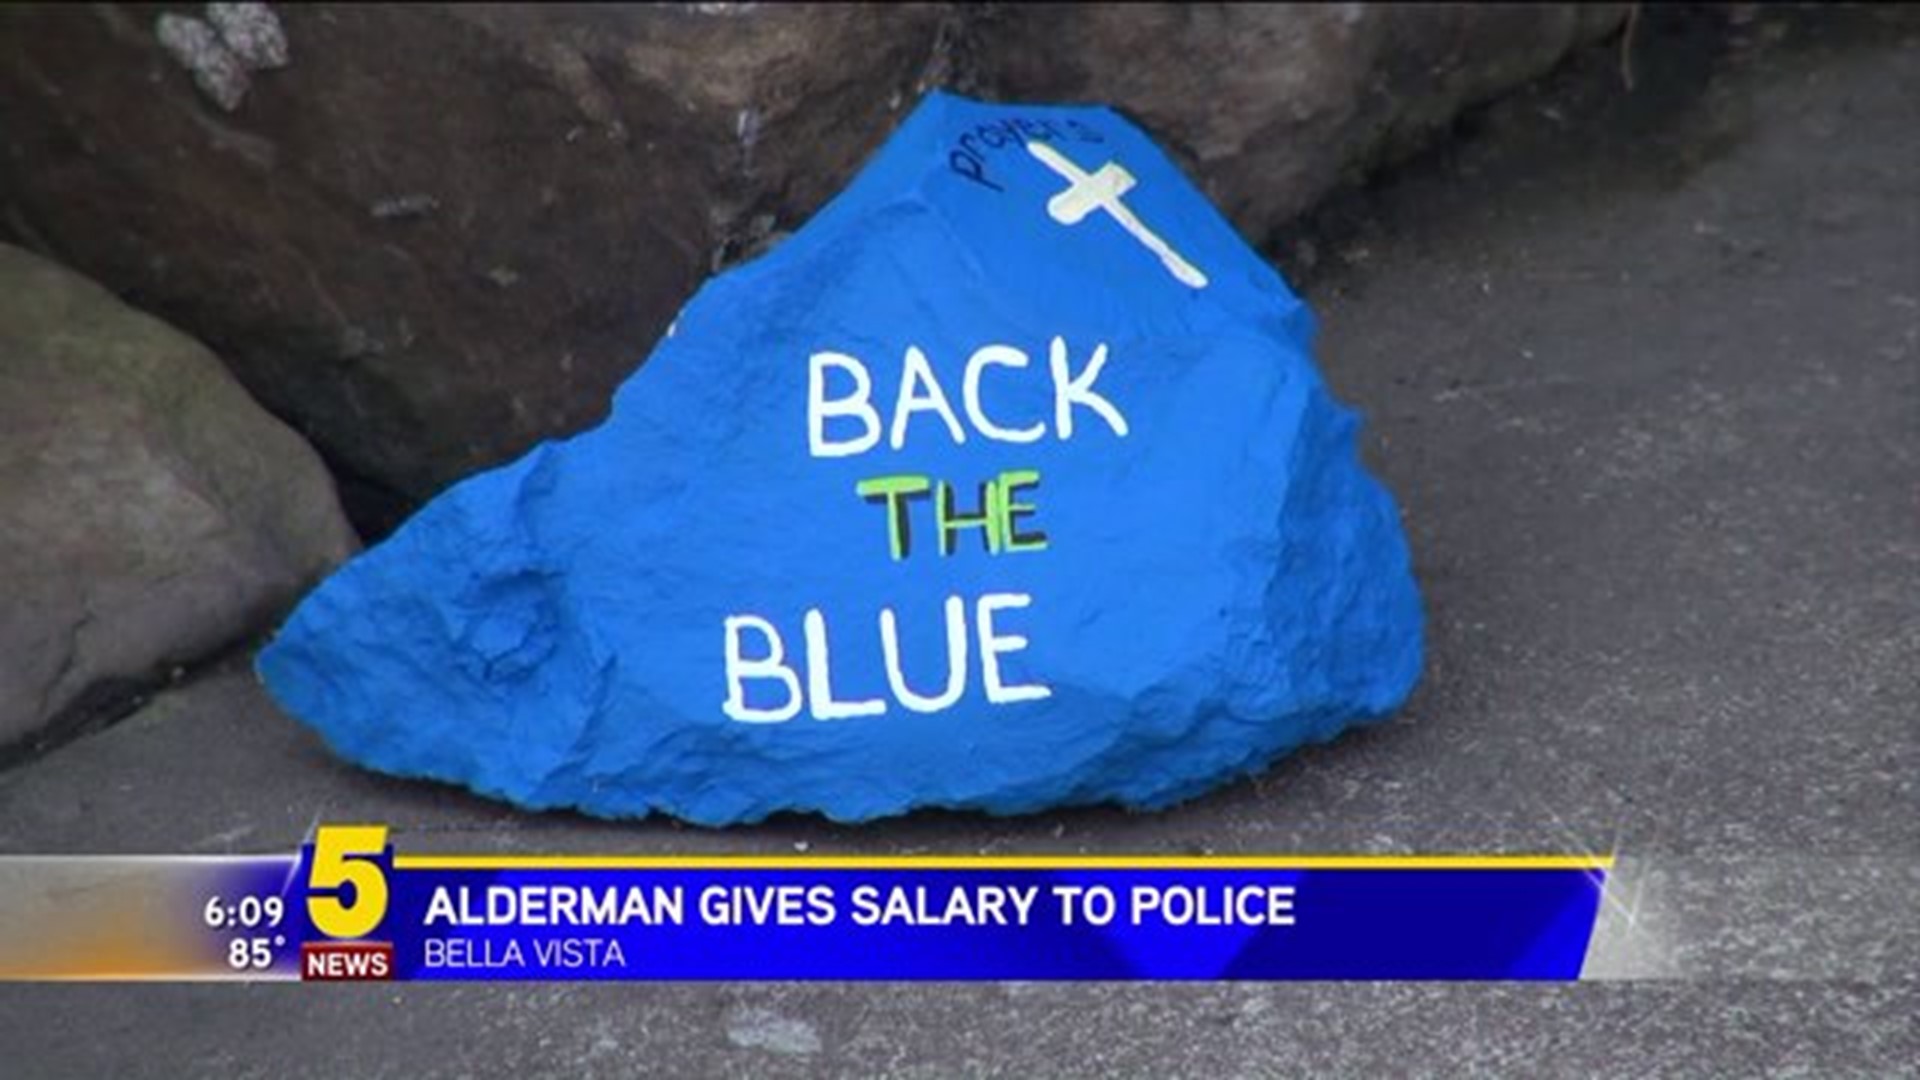 BELLA VISTA ALDERMAN GIVES SALARY TO POLICE